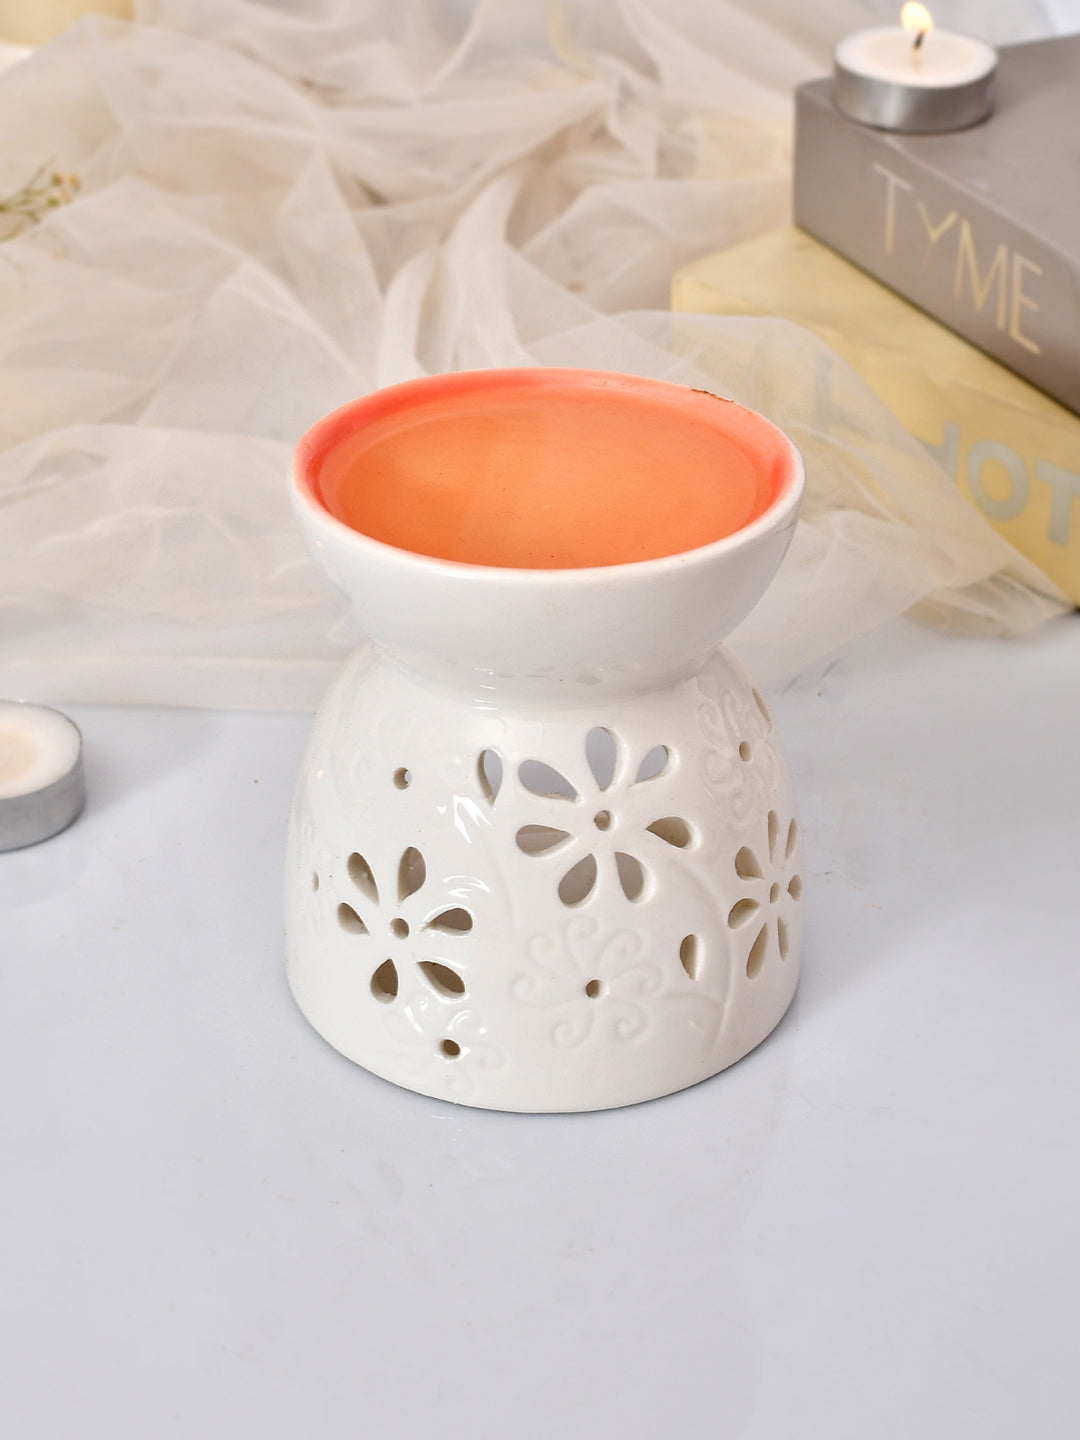 Ceramic Blissful Fragrance Oil Diffuser in White